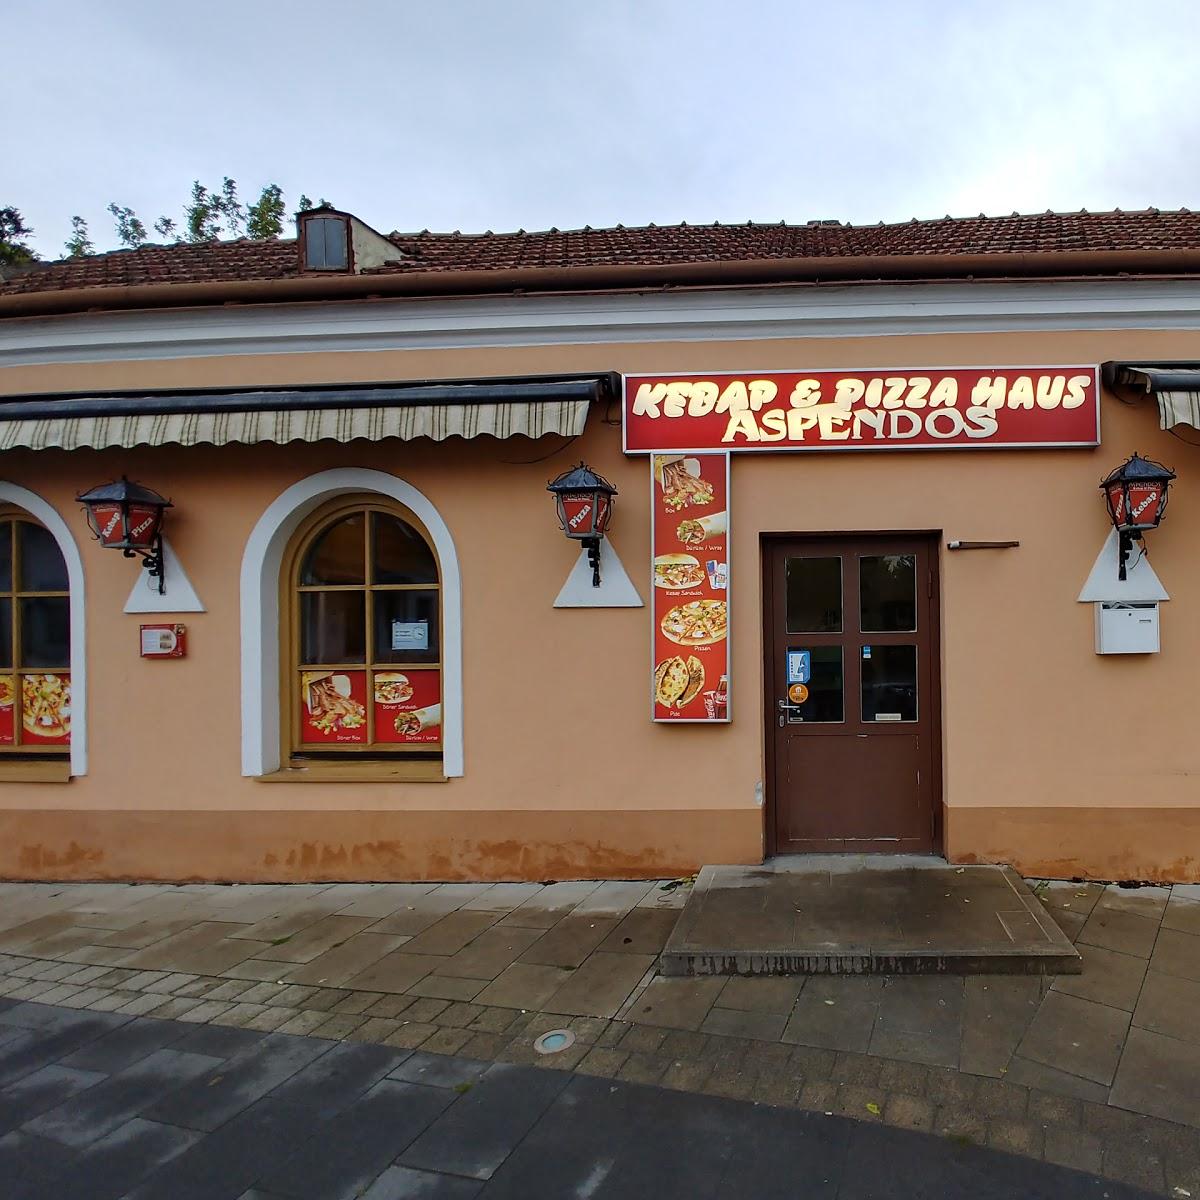 Restaurant "Kebab & Pizza Haus Aspendos" in Gramatneusiedl